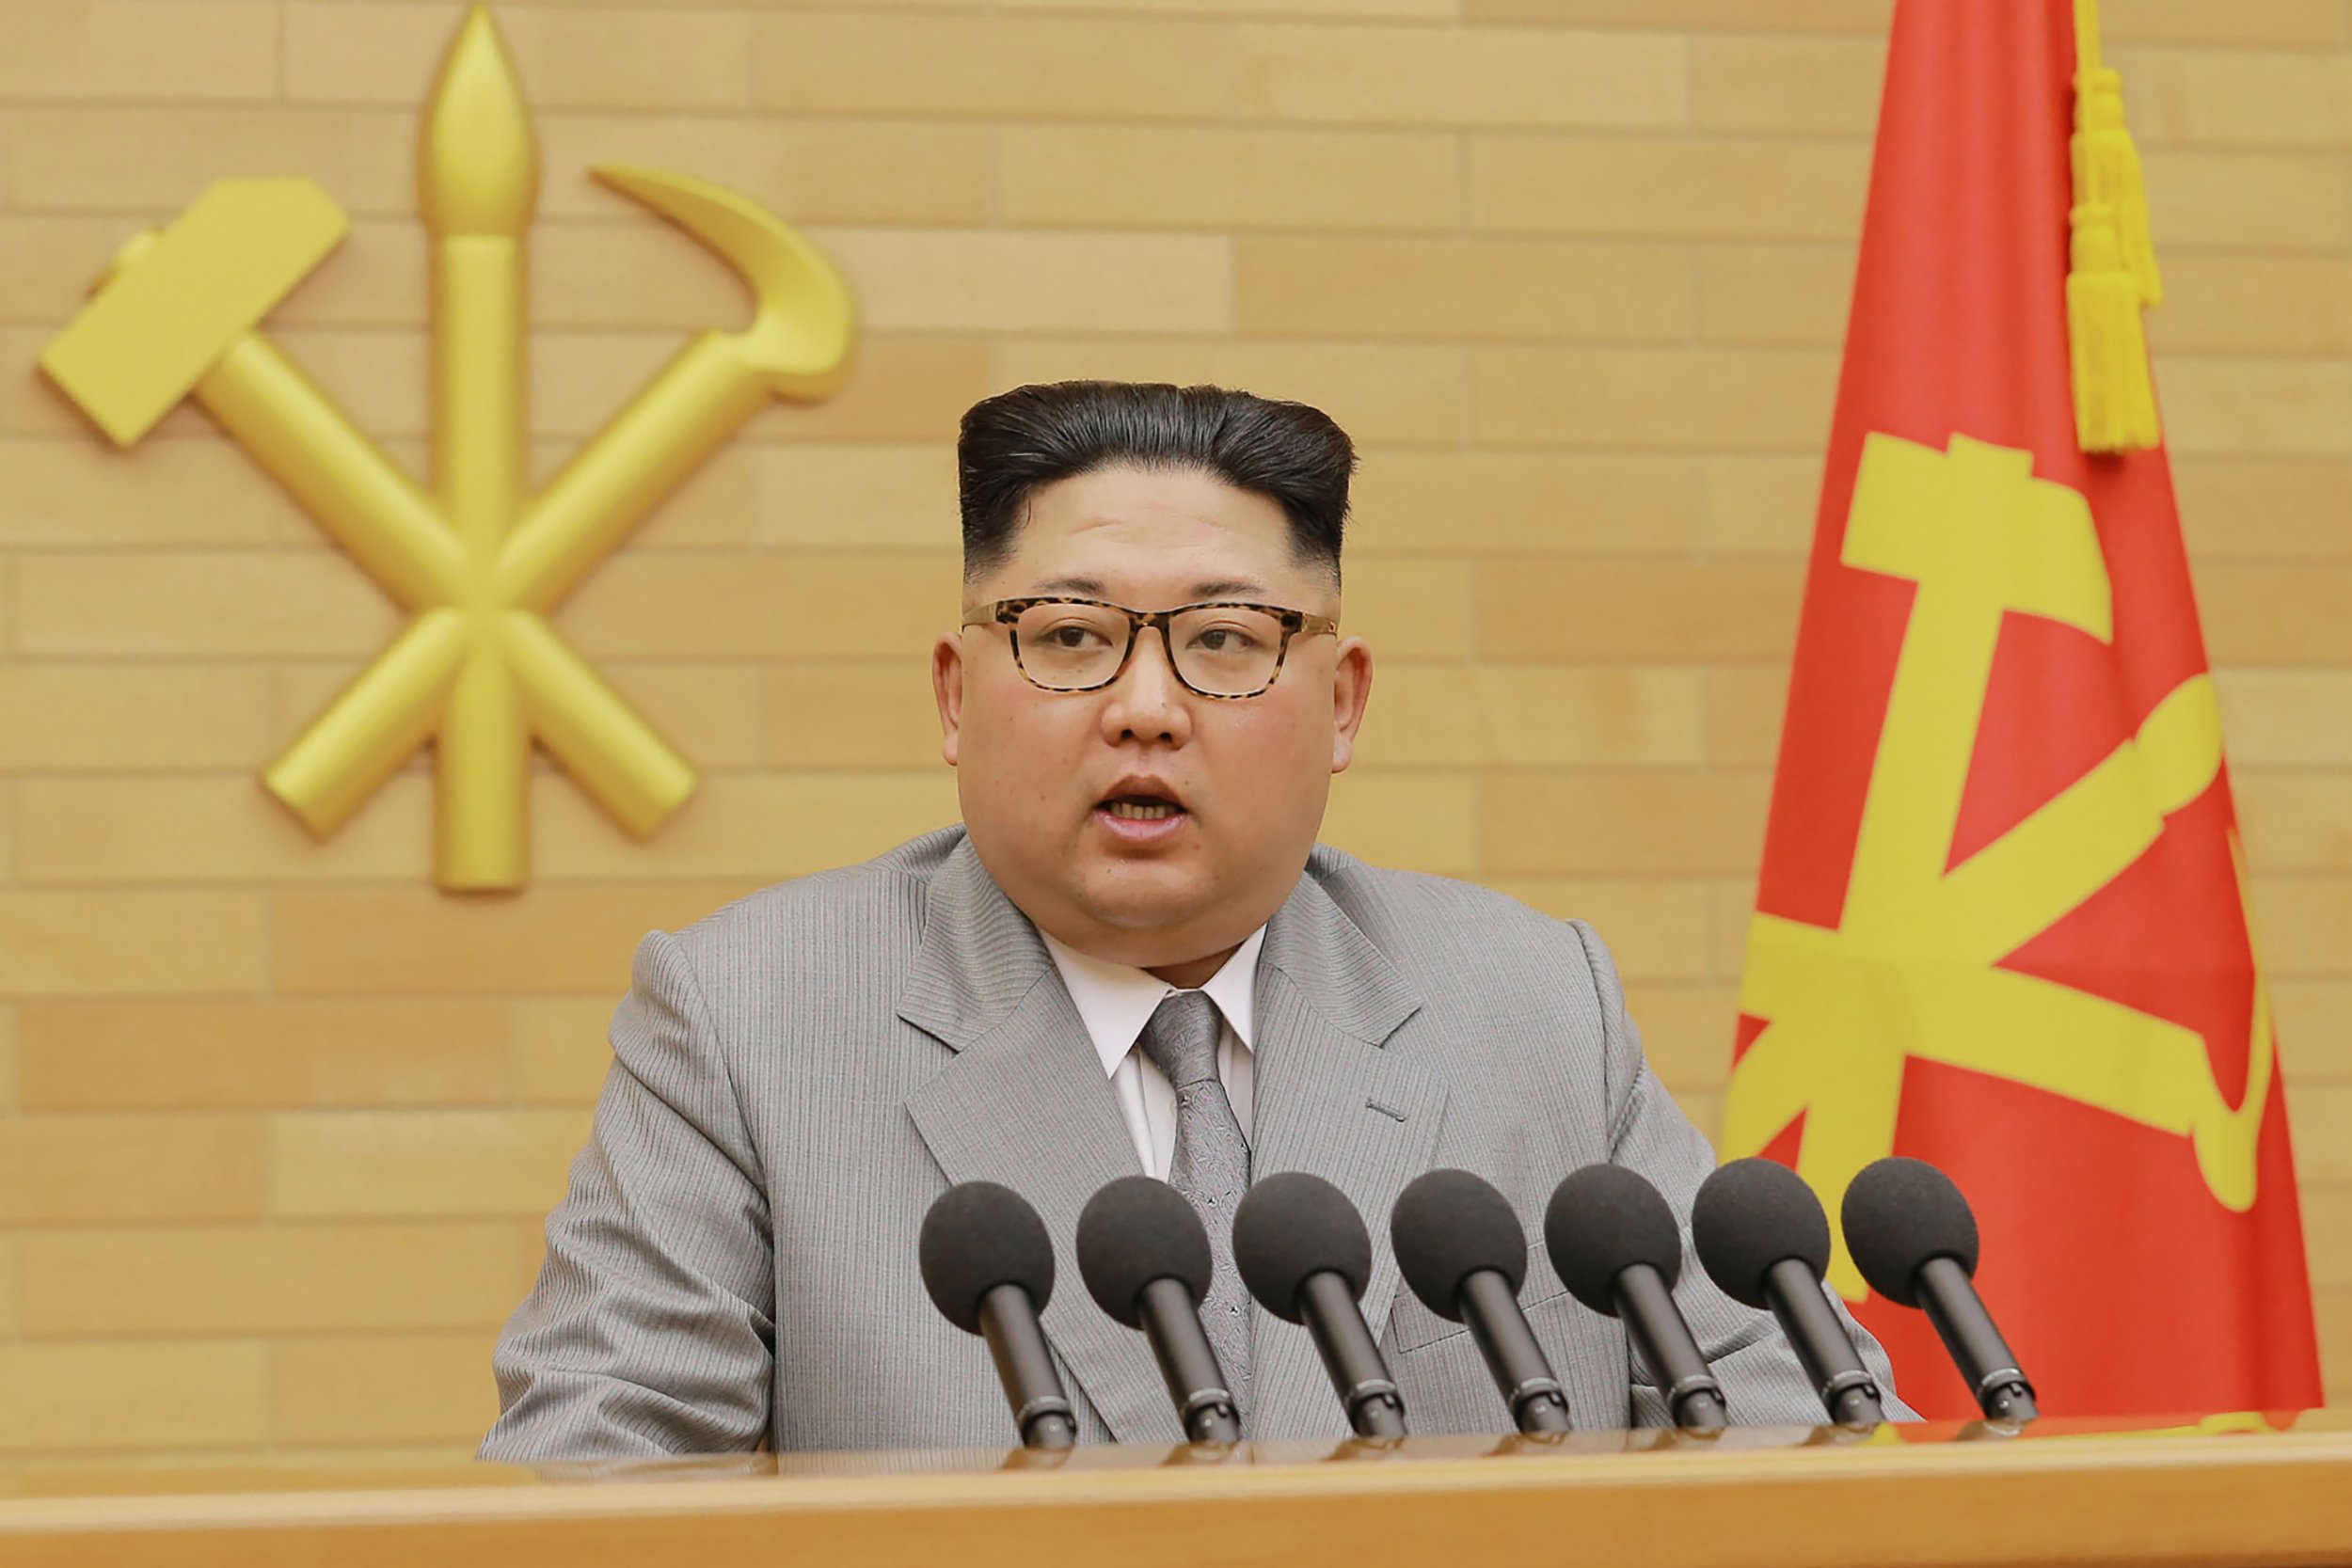 Kim Jong Un Quotes 10 Provocative Things North Korea's Dictatorial